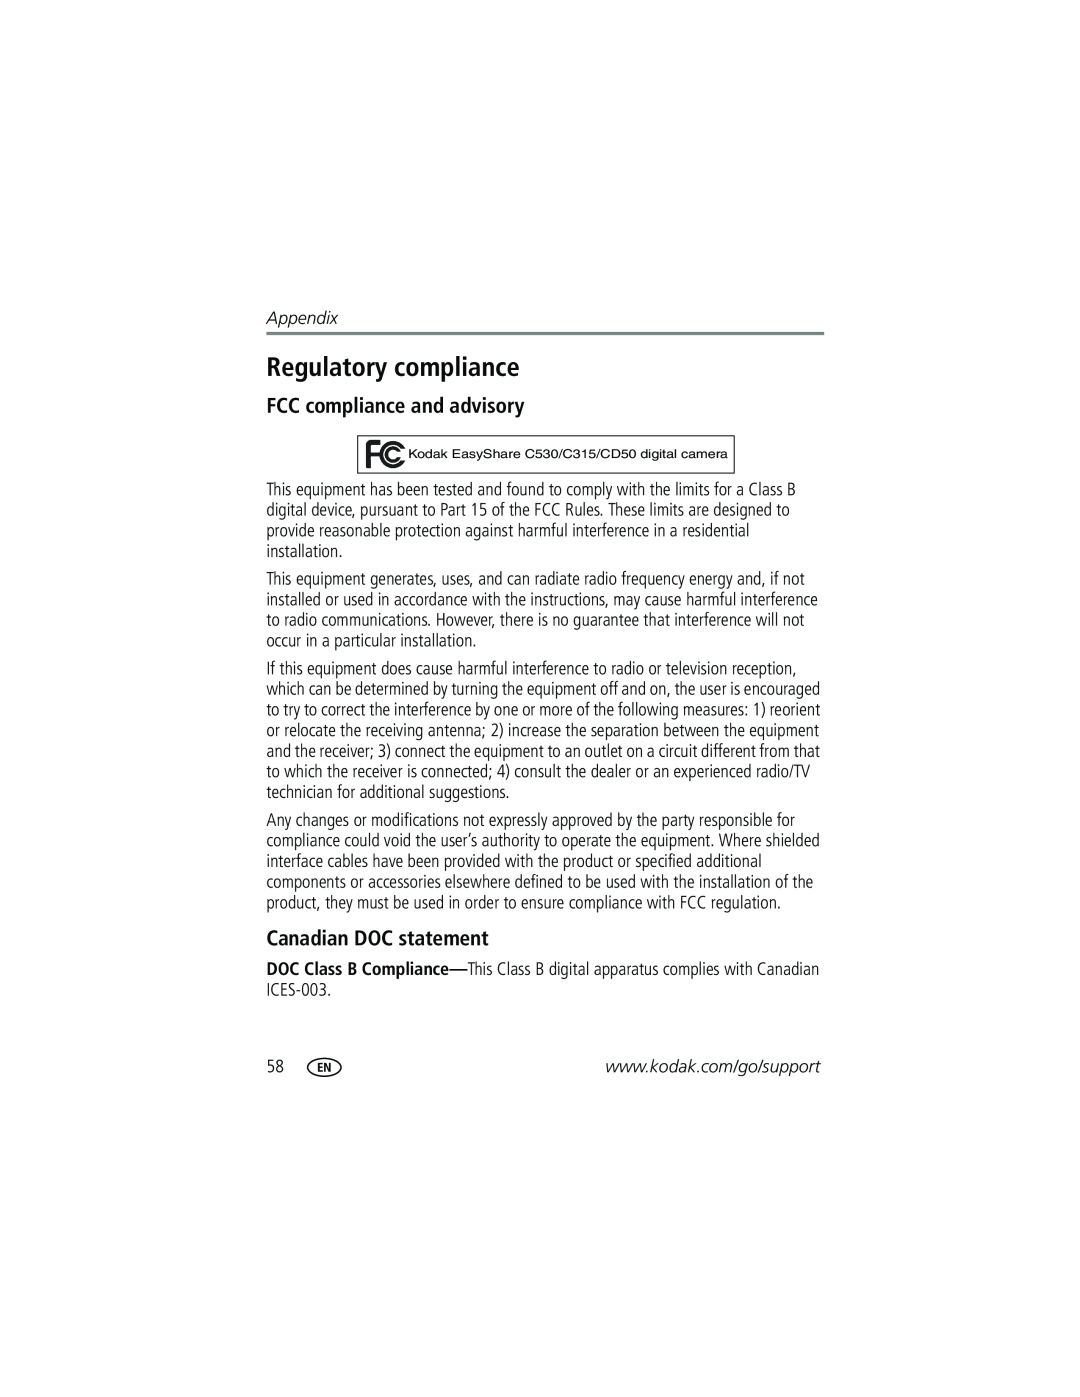 Kodak C315, CD50, C530 manual Regulatory compliance, FCC compliance and advisory, Canadian DOC statement, Appendix 